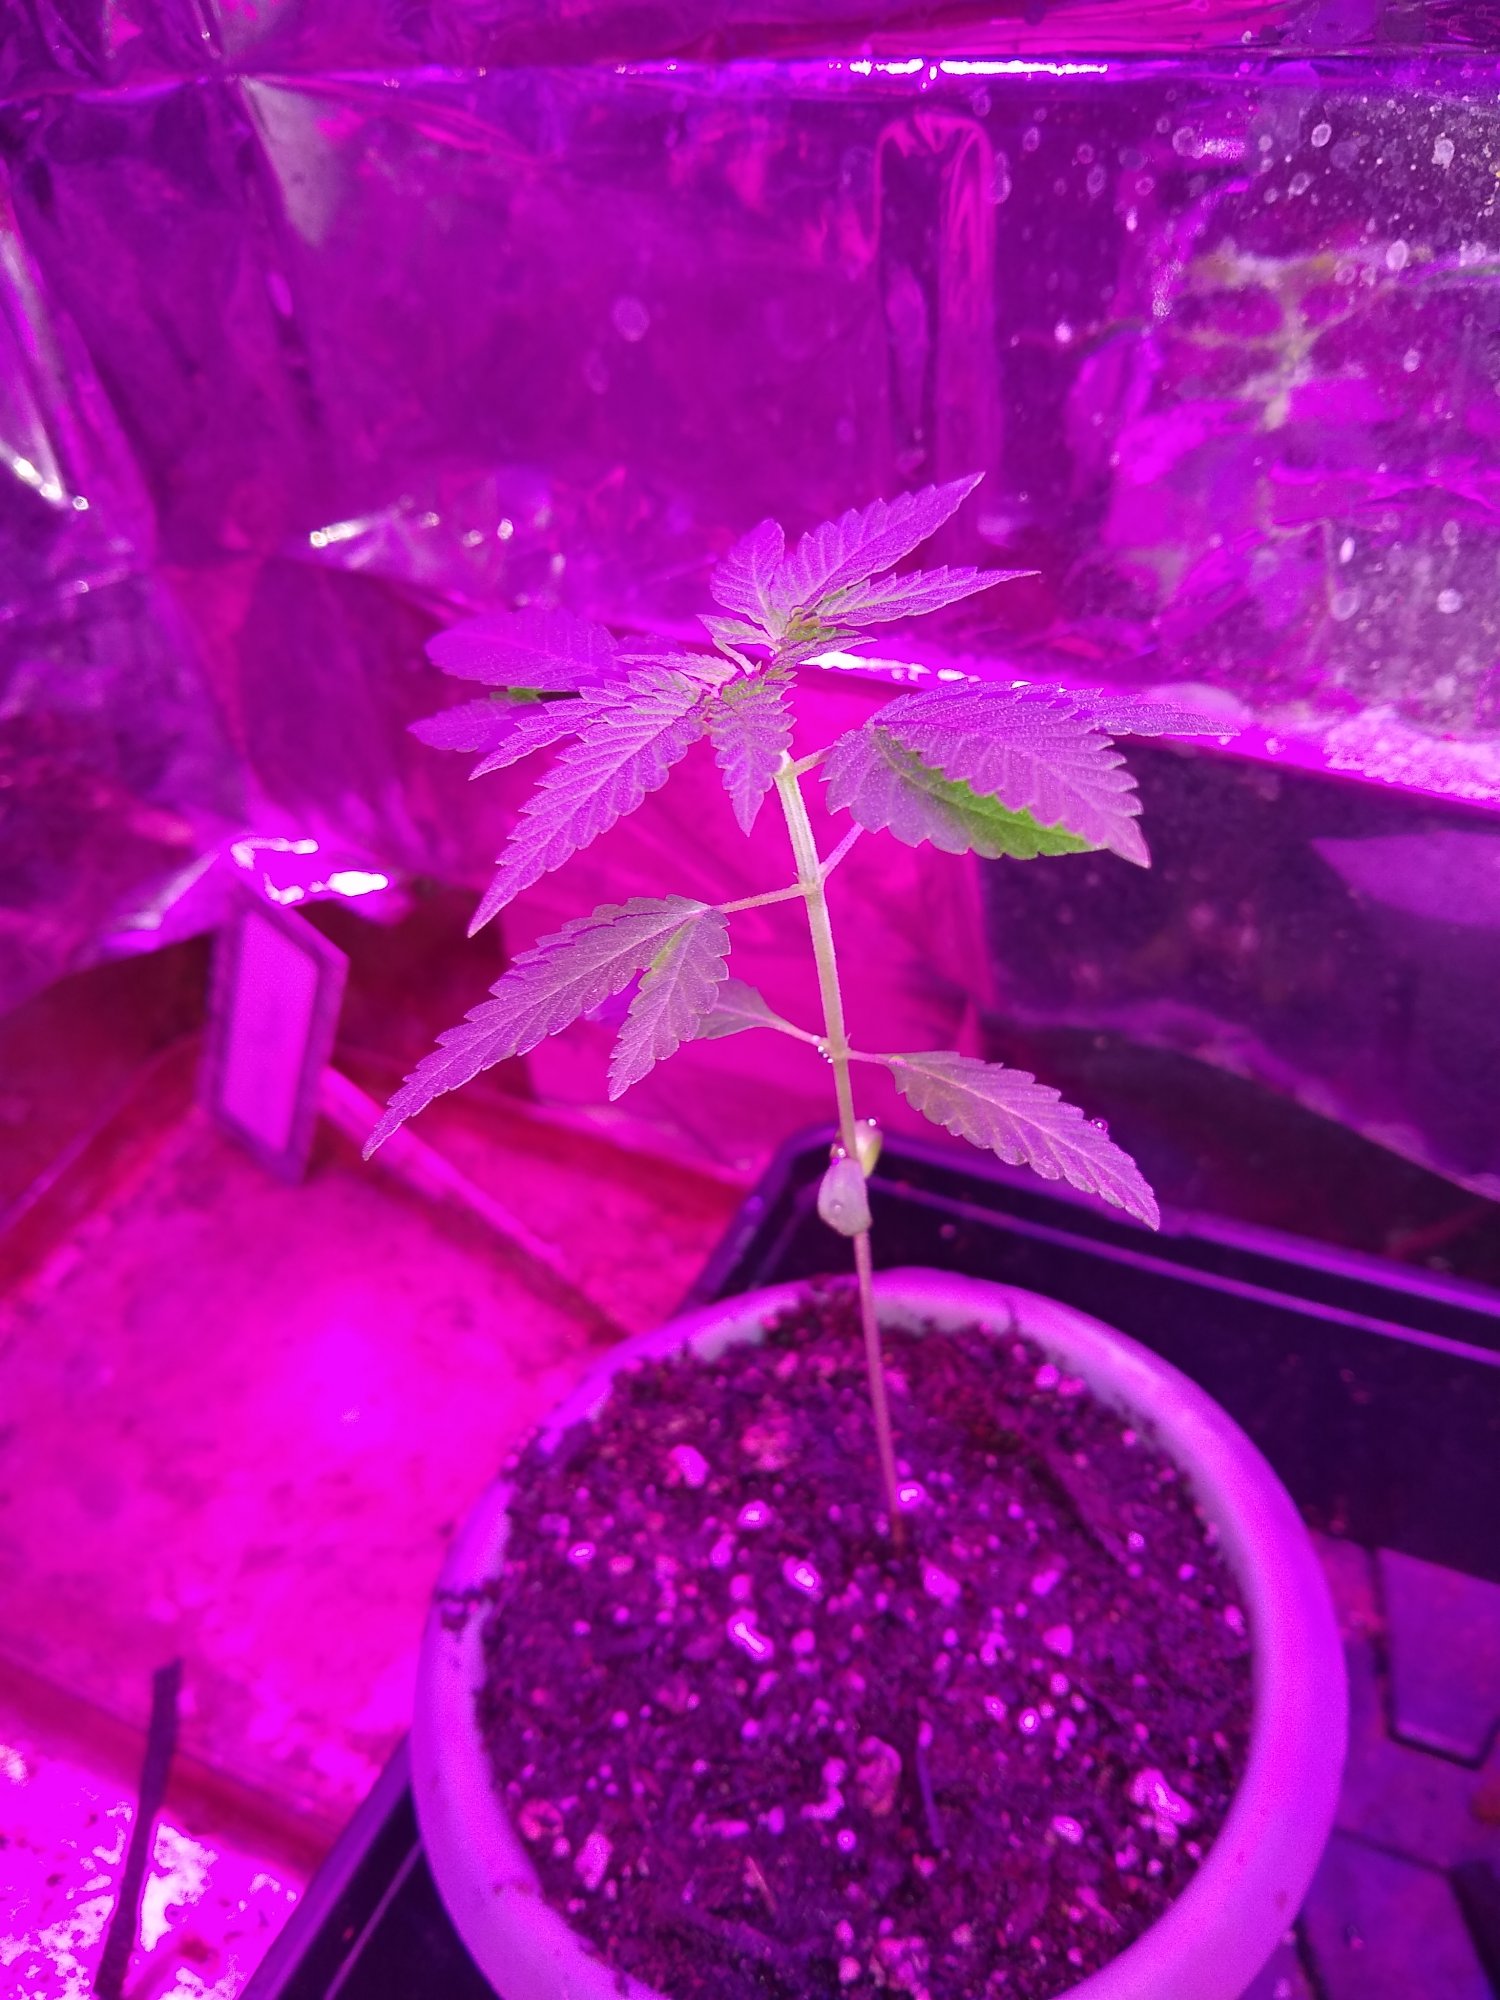 New grower needs some help 3